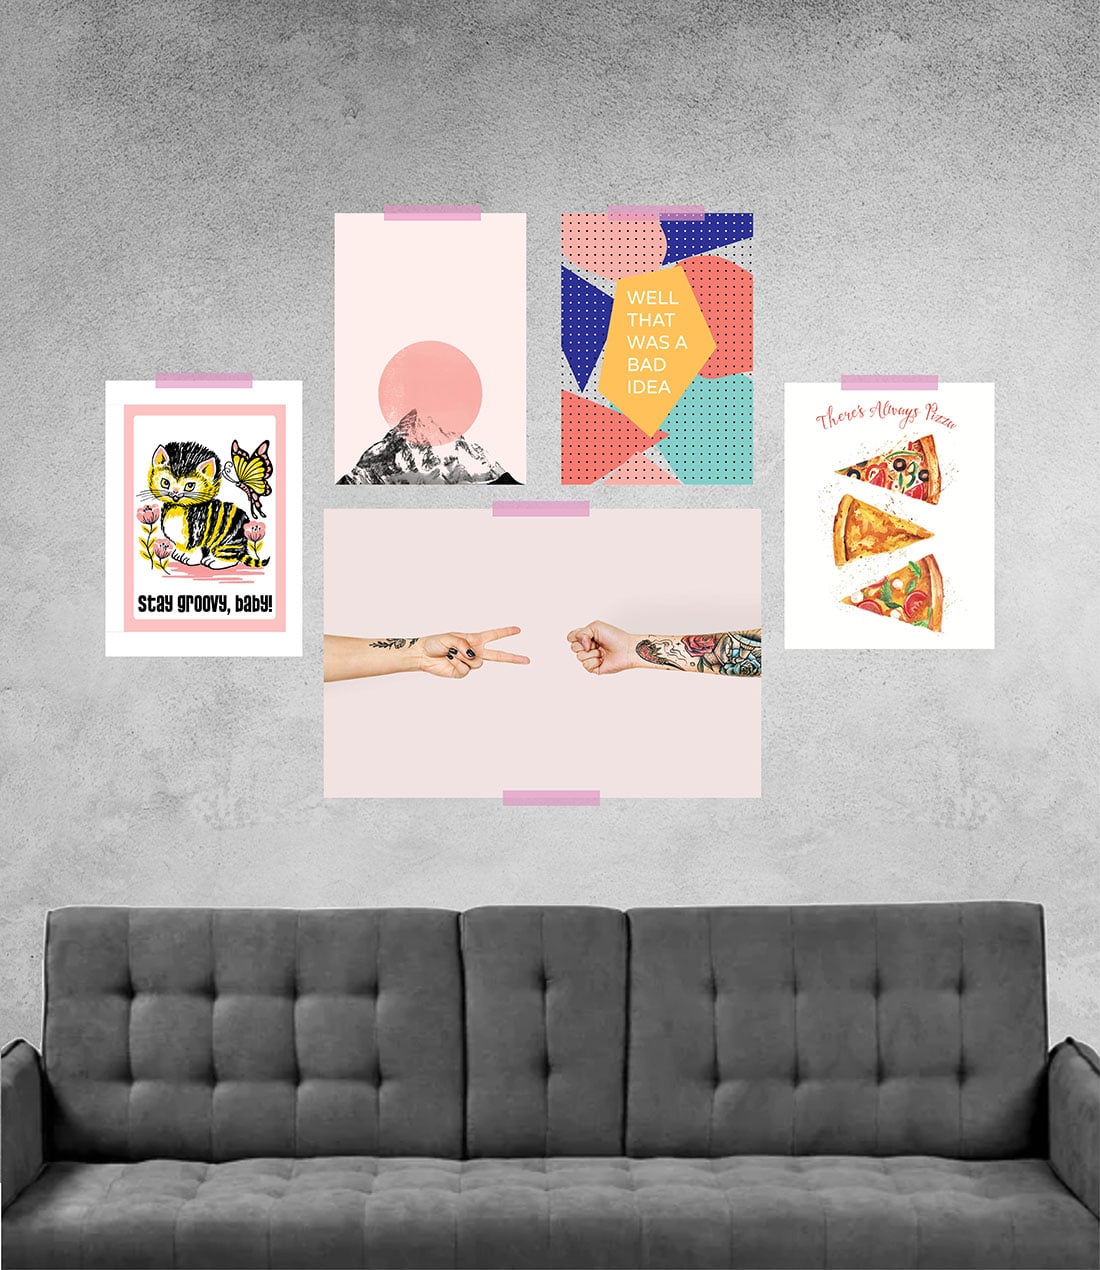 Free Printable Dorm Art • 20+ Ideas for Your Dorm Walls • Little Gold Pixel • #free #freebies #freeprintables #dorm #dormart #dormroom #gallerywallideas